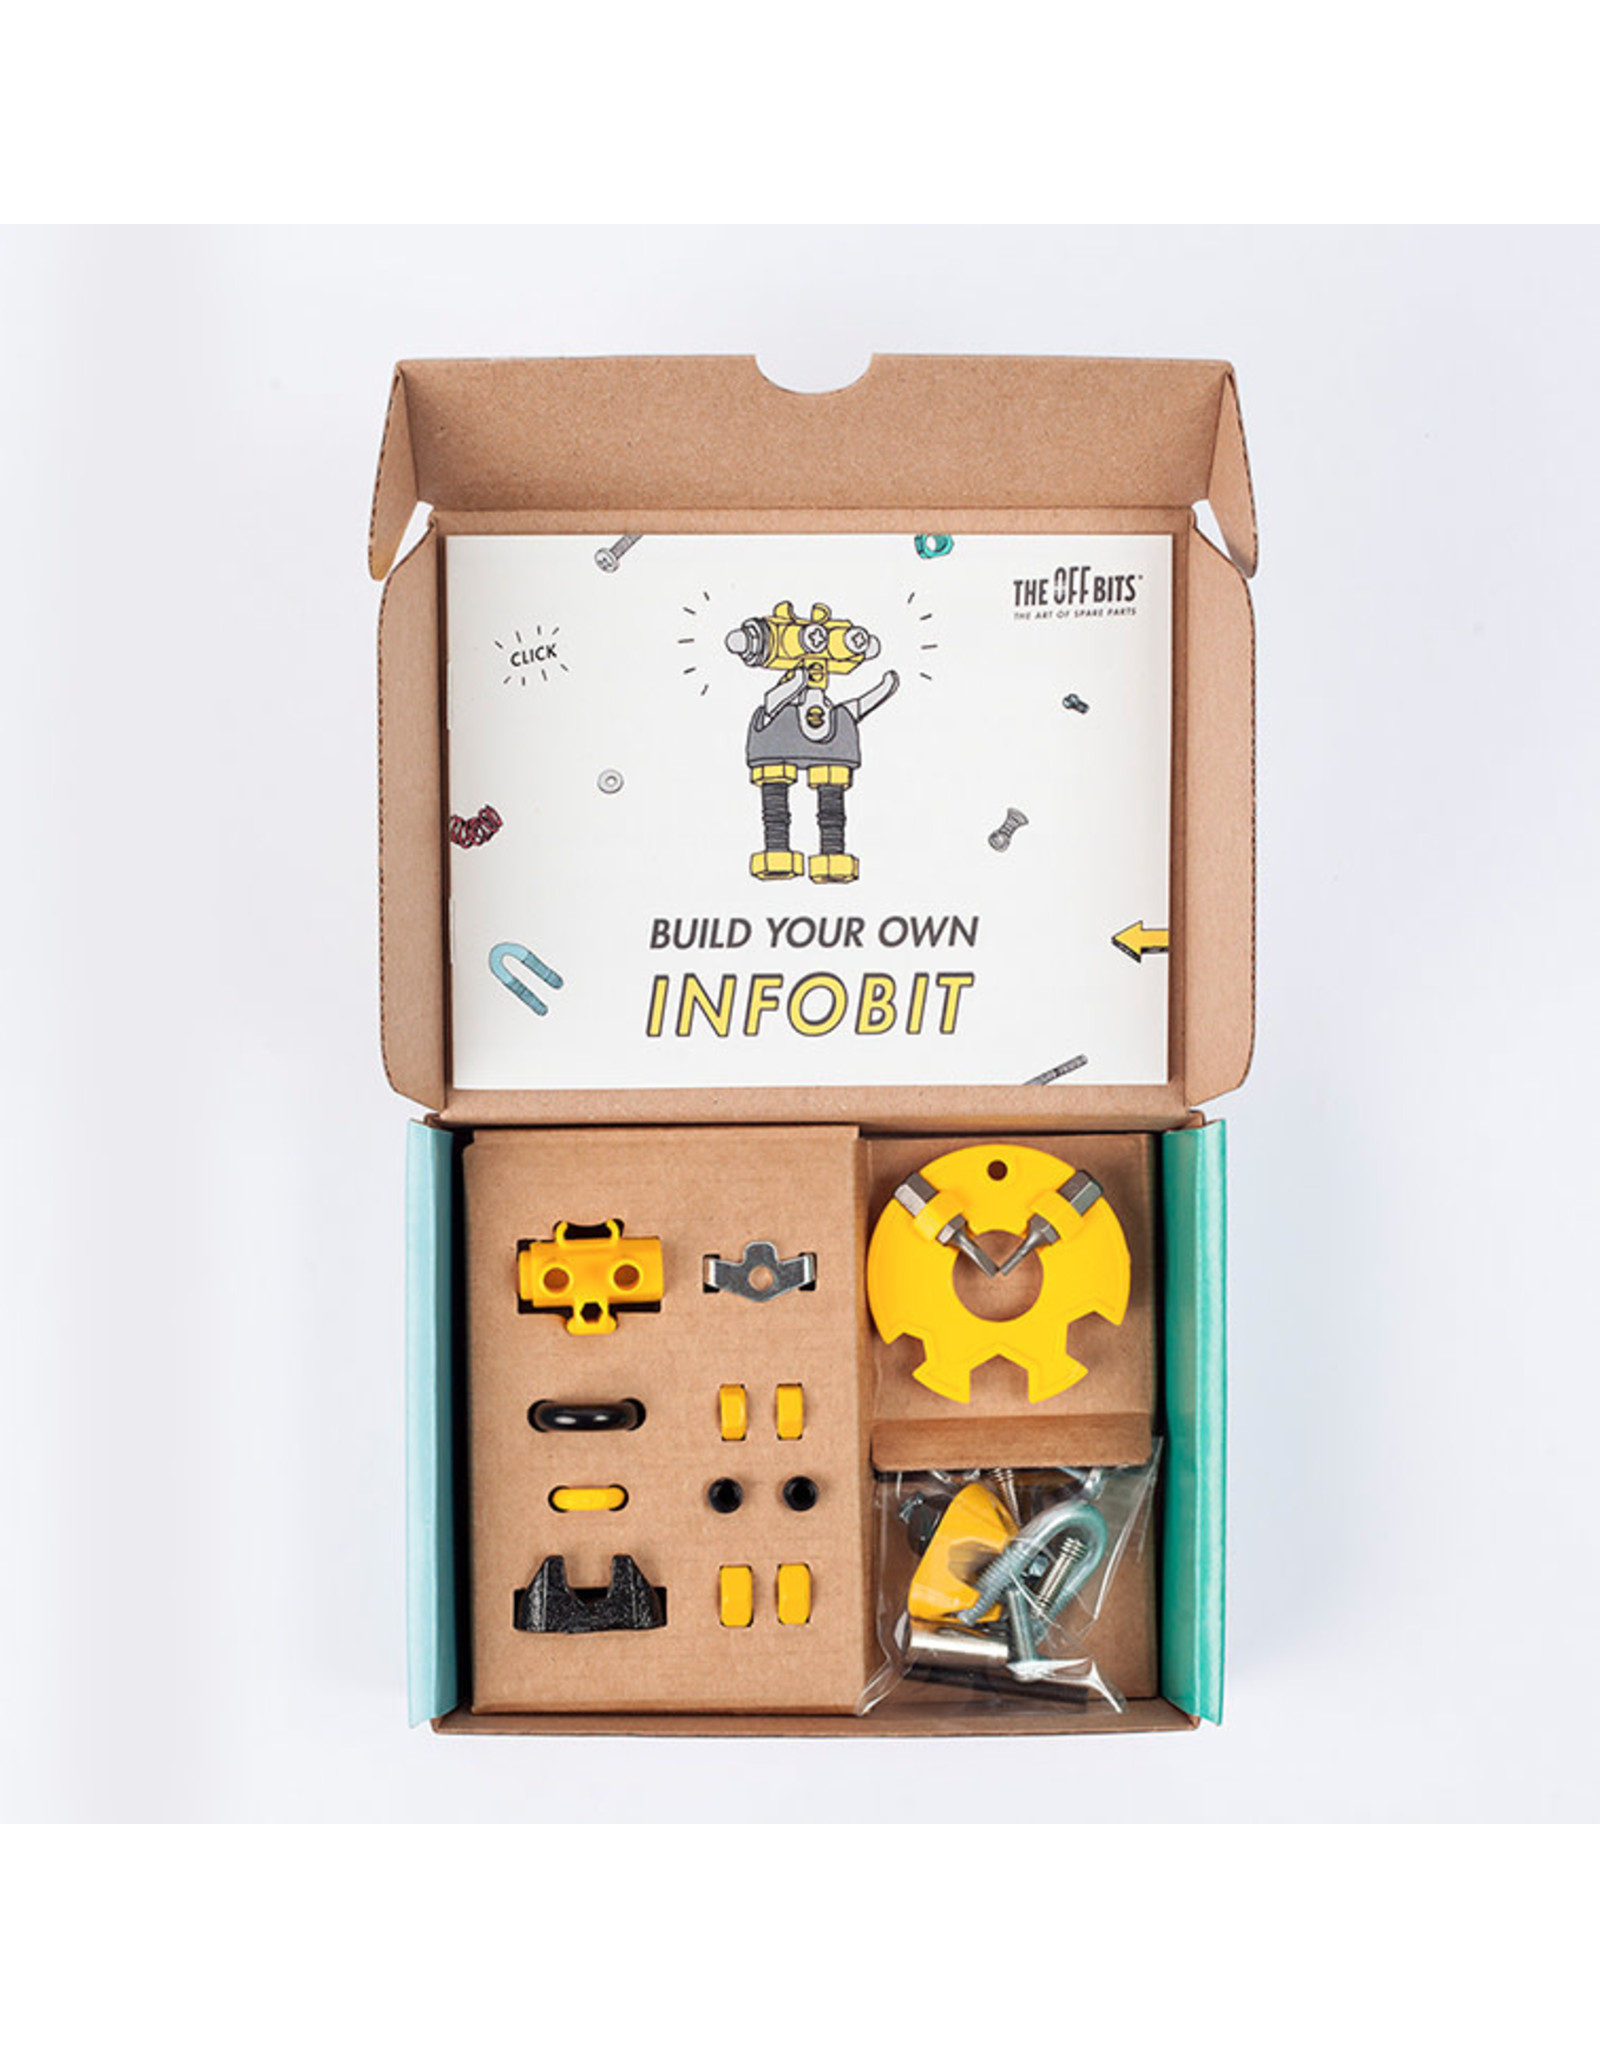 The OffBits OffBits Character Kit, Info Bit